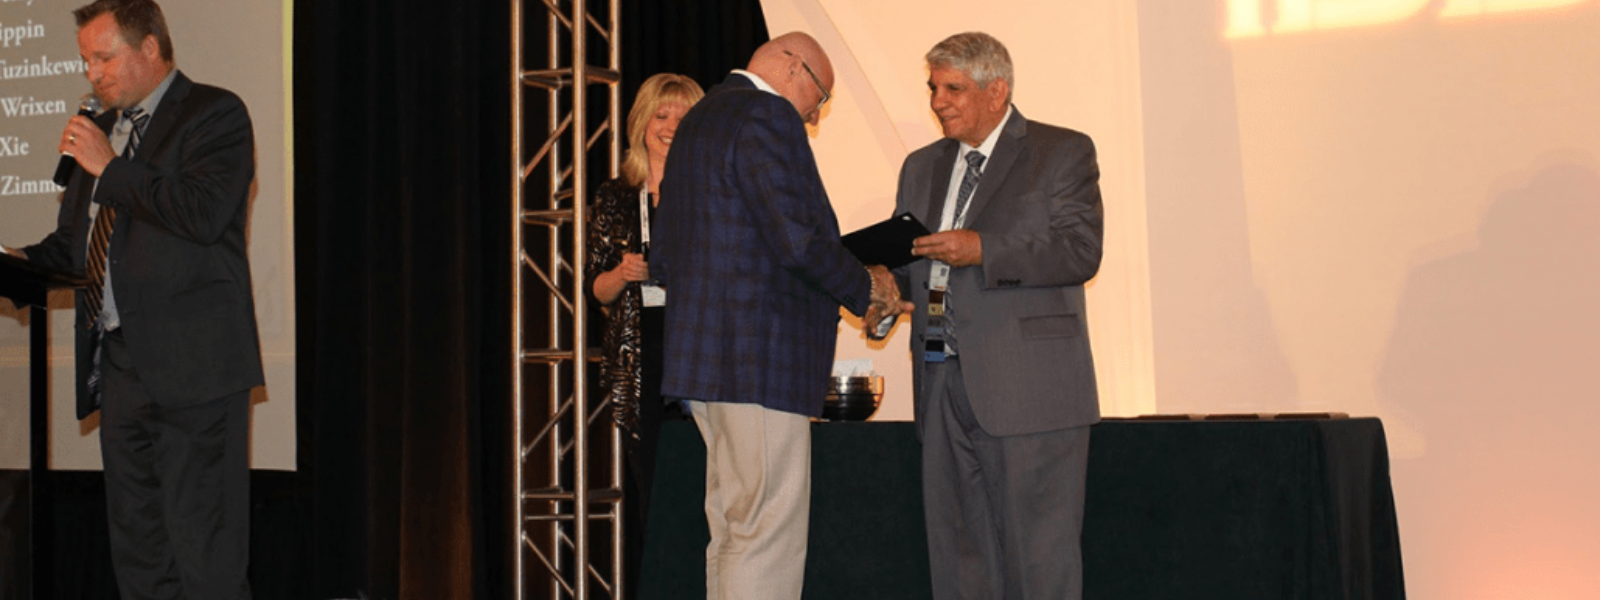 pino bacinello recognized with prestigious chairman’s circle award from the ibba